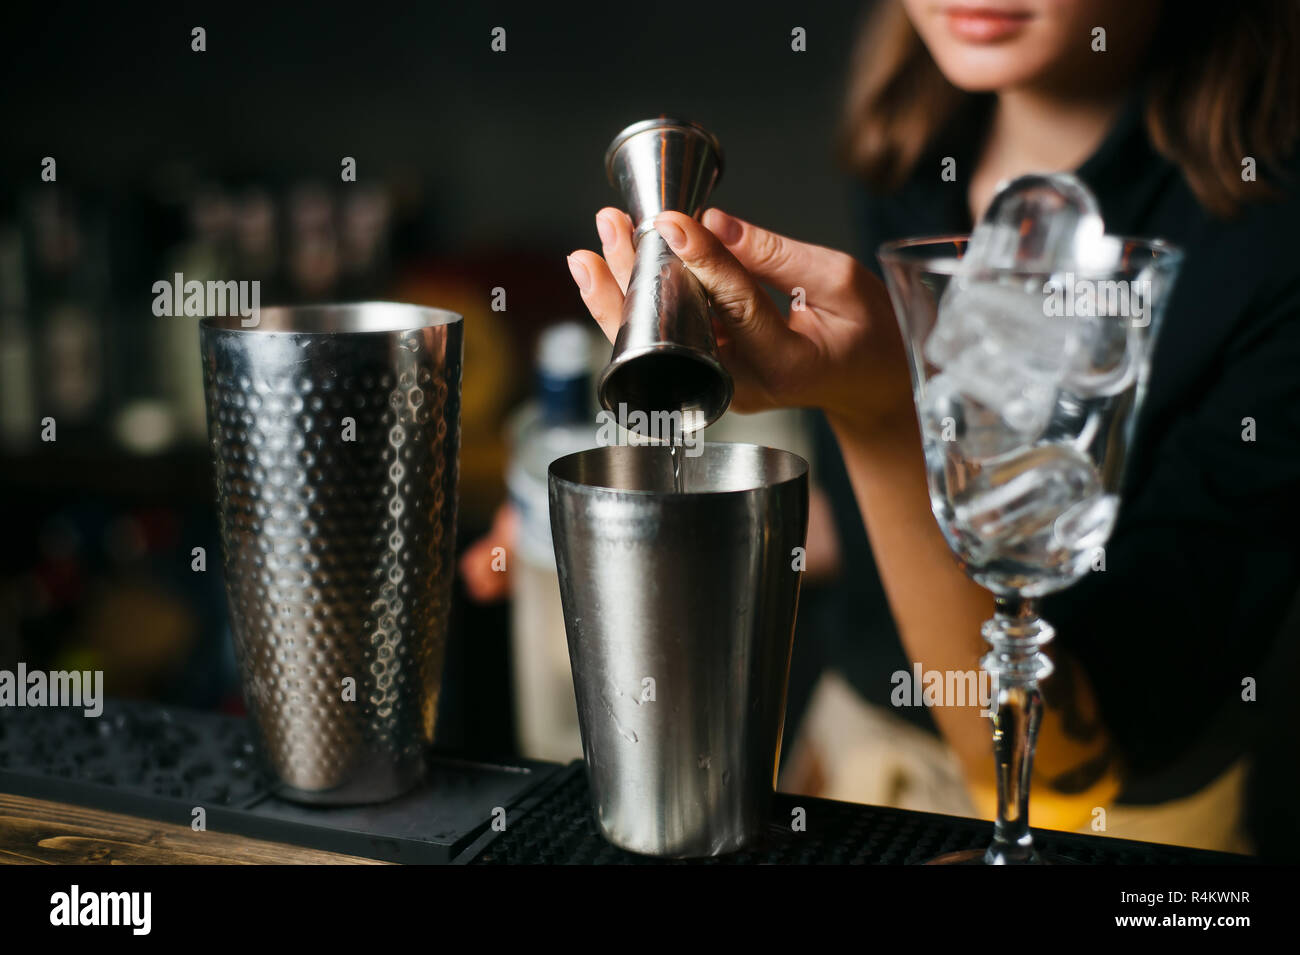 cocktail preparation. bartender coocks a beverage at bar counter. Stock Photo